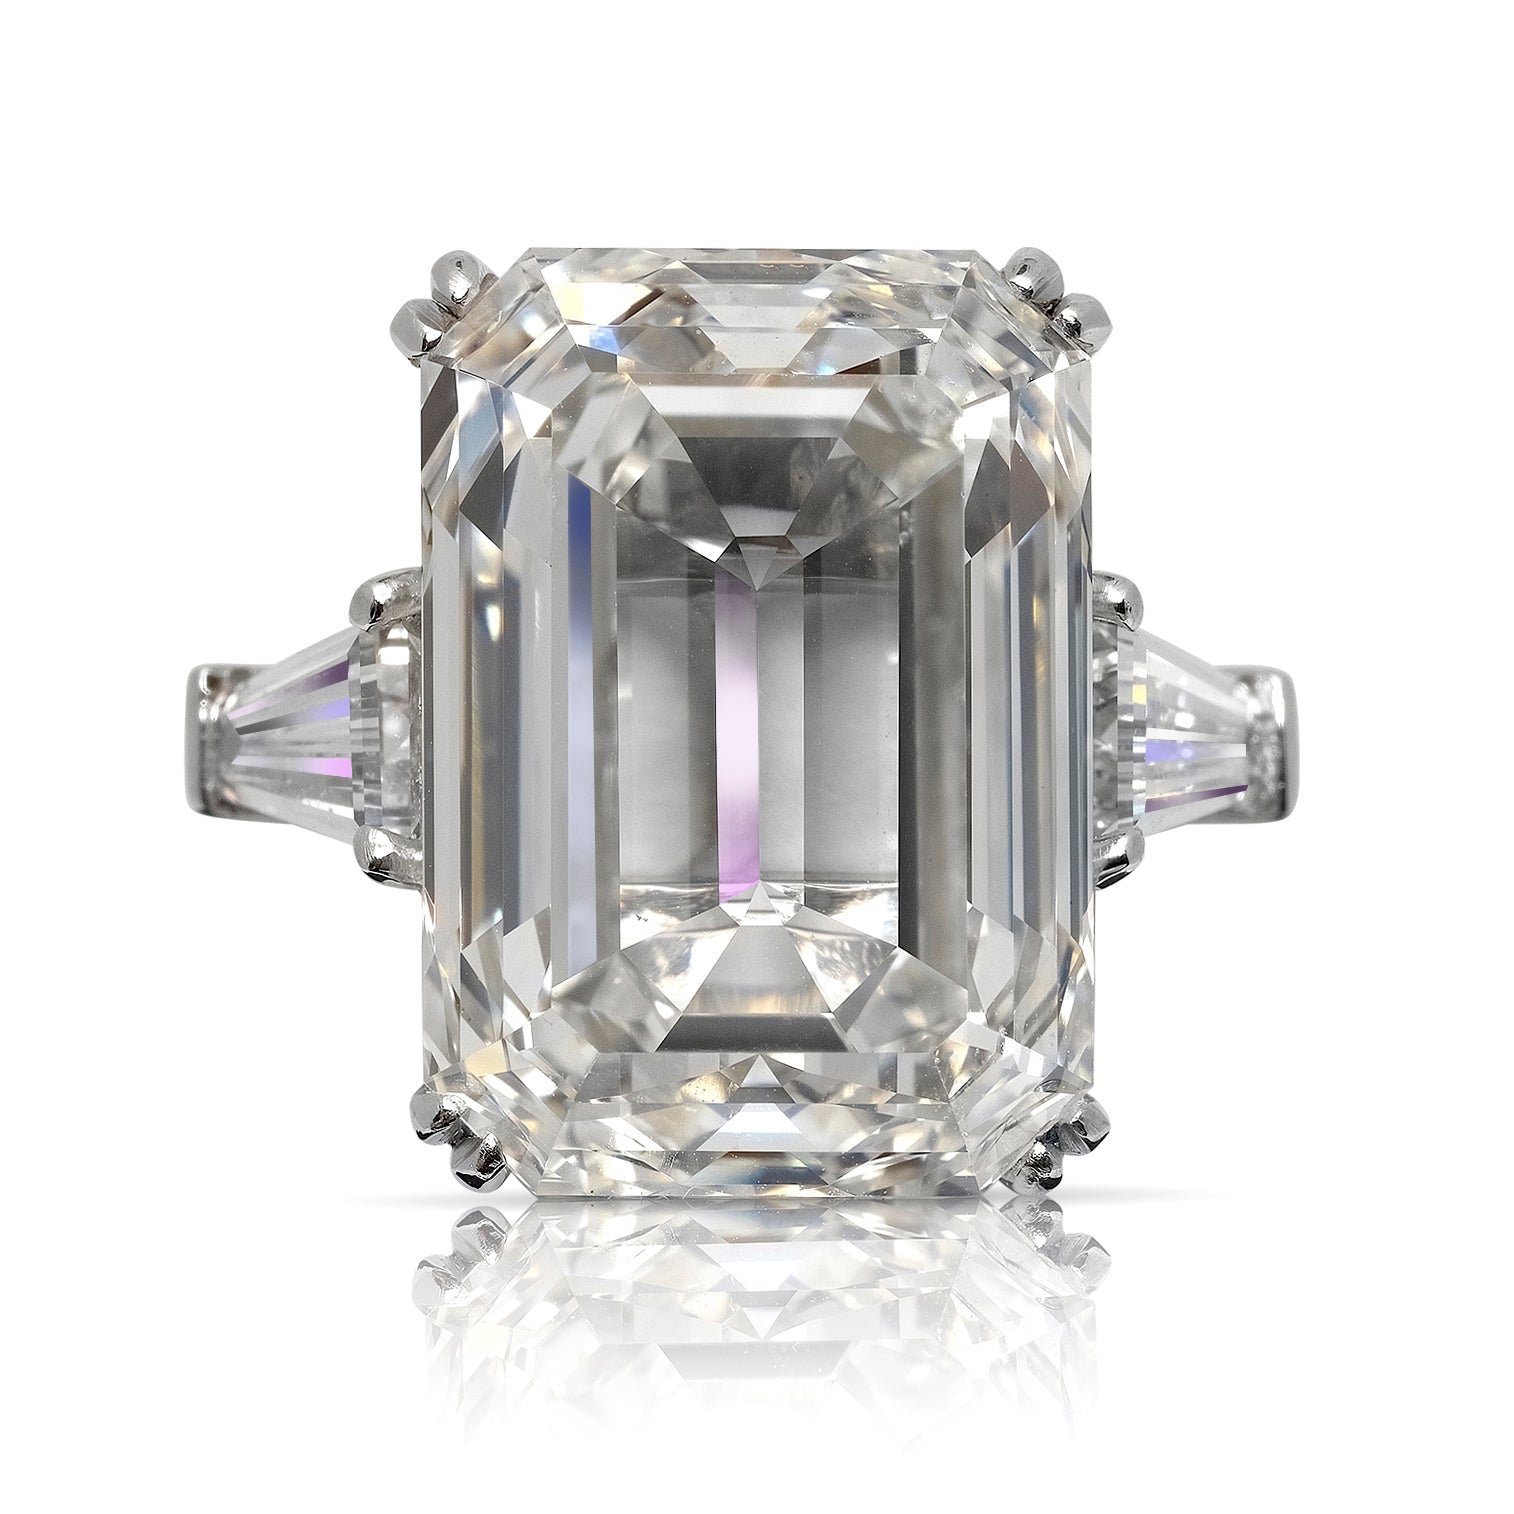 Fancy Emerald Cut Three Stone Diamond Engagement Ring in 14K White Gold